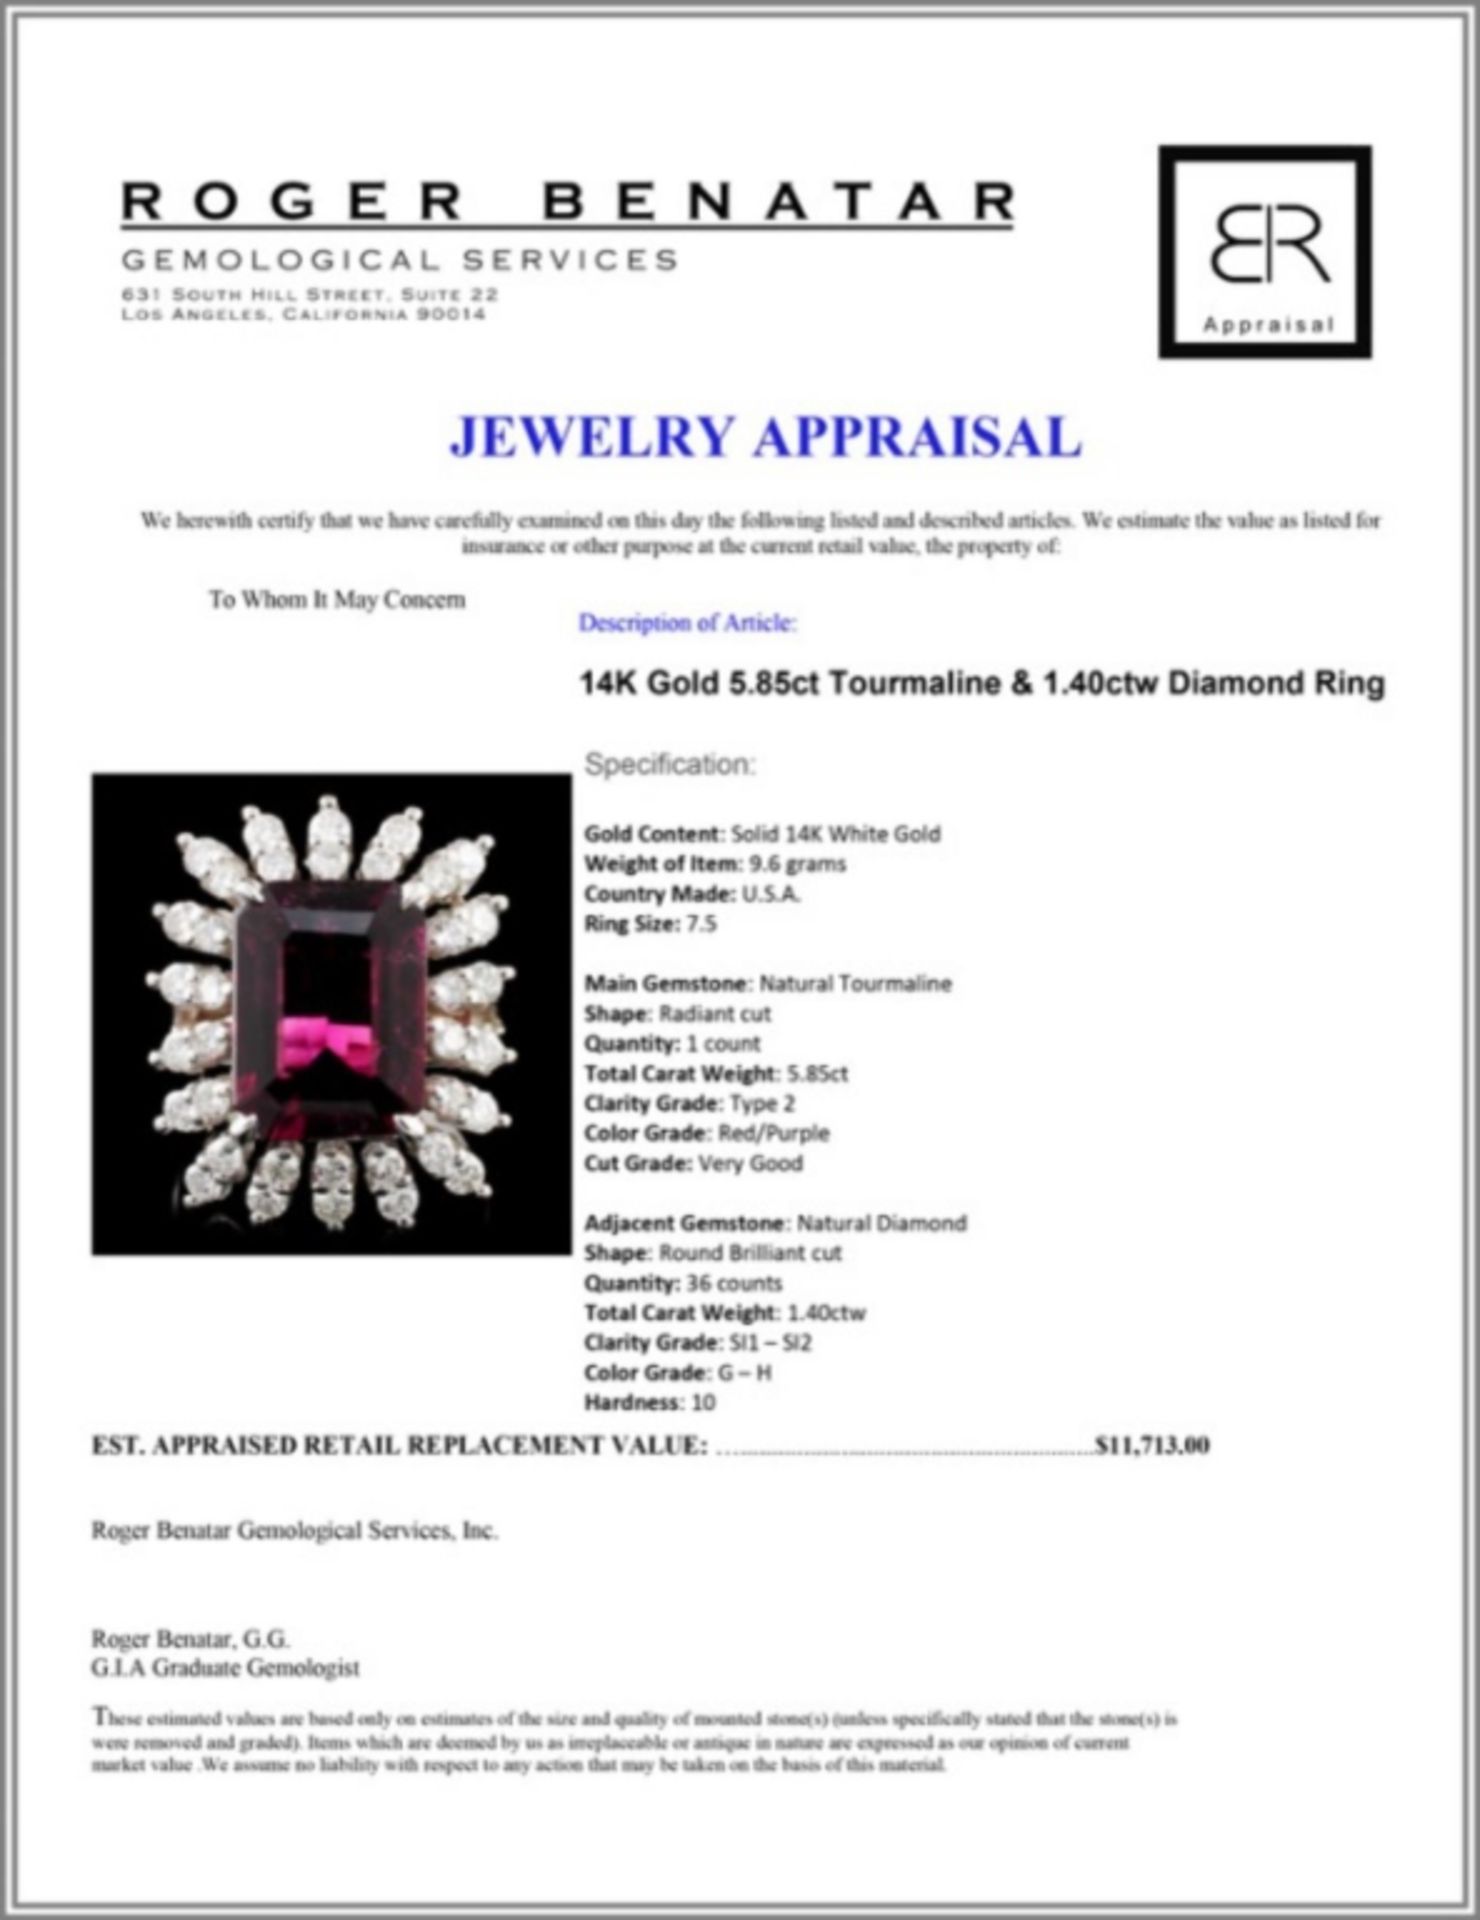 14K Gold 5.85ct Tourmaline & 1.40ctw Diamond Ring - Image 4 of 4